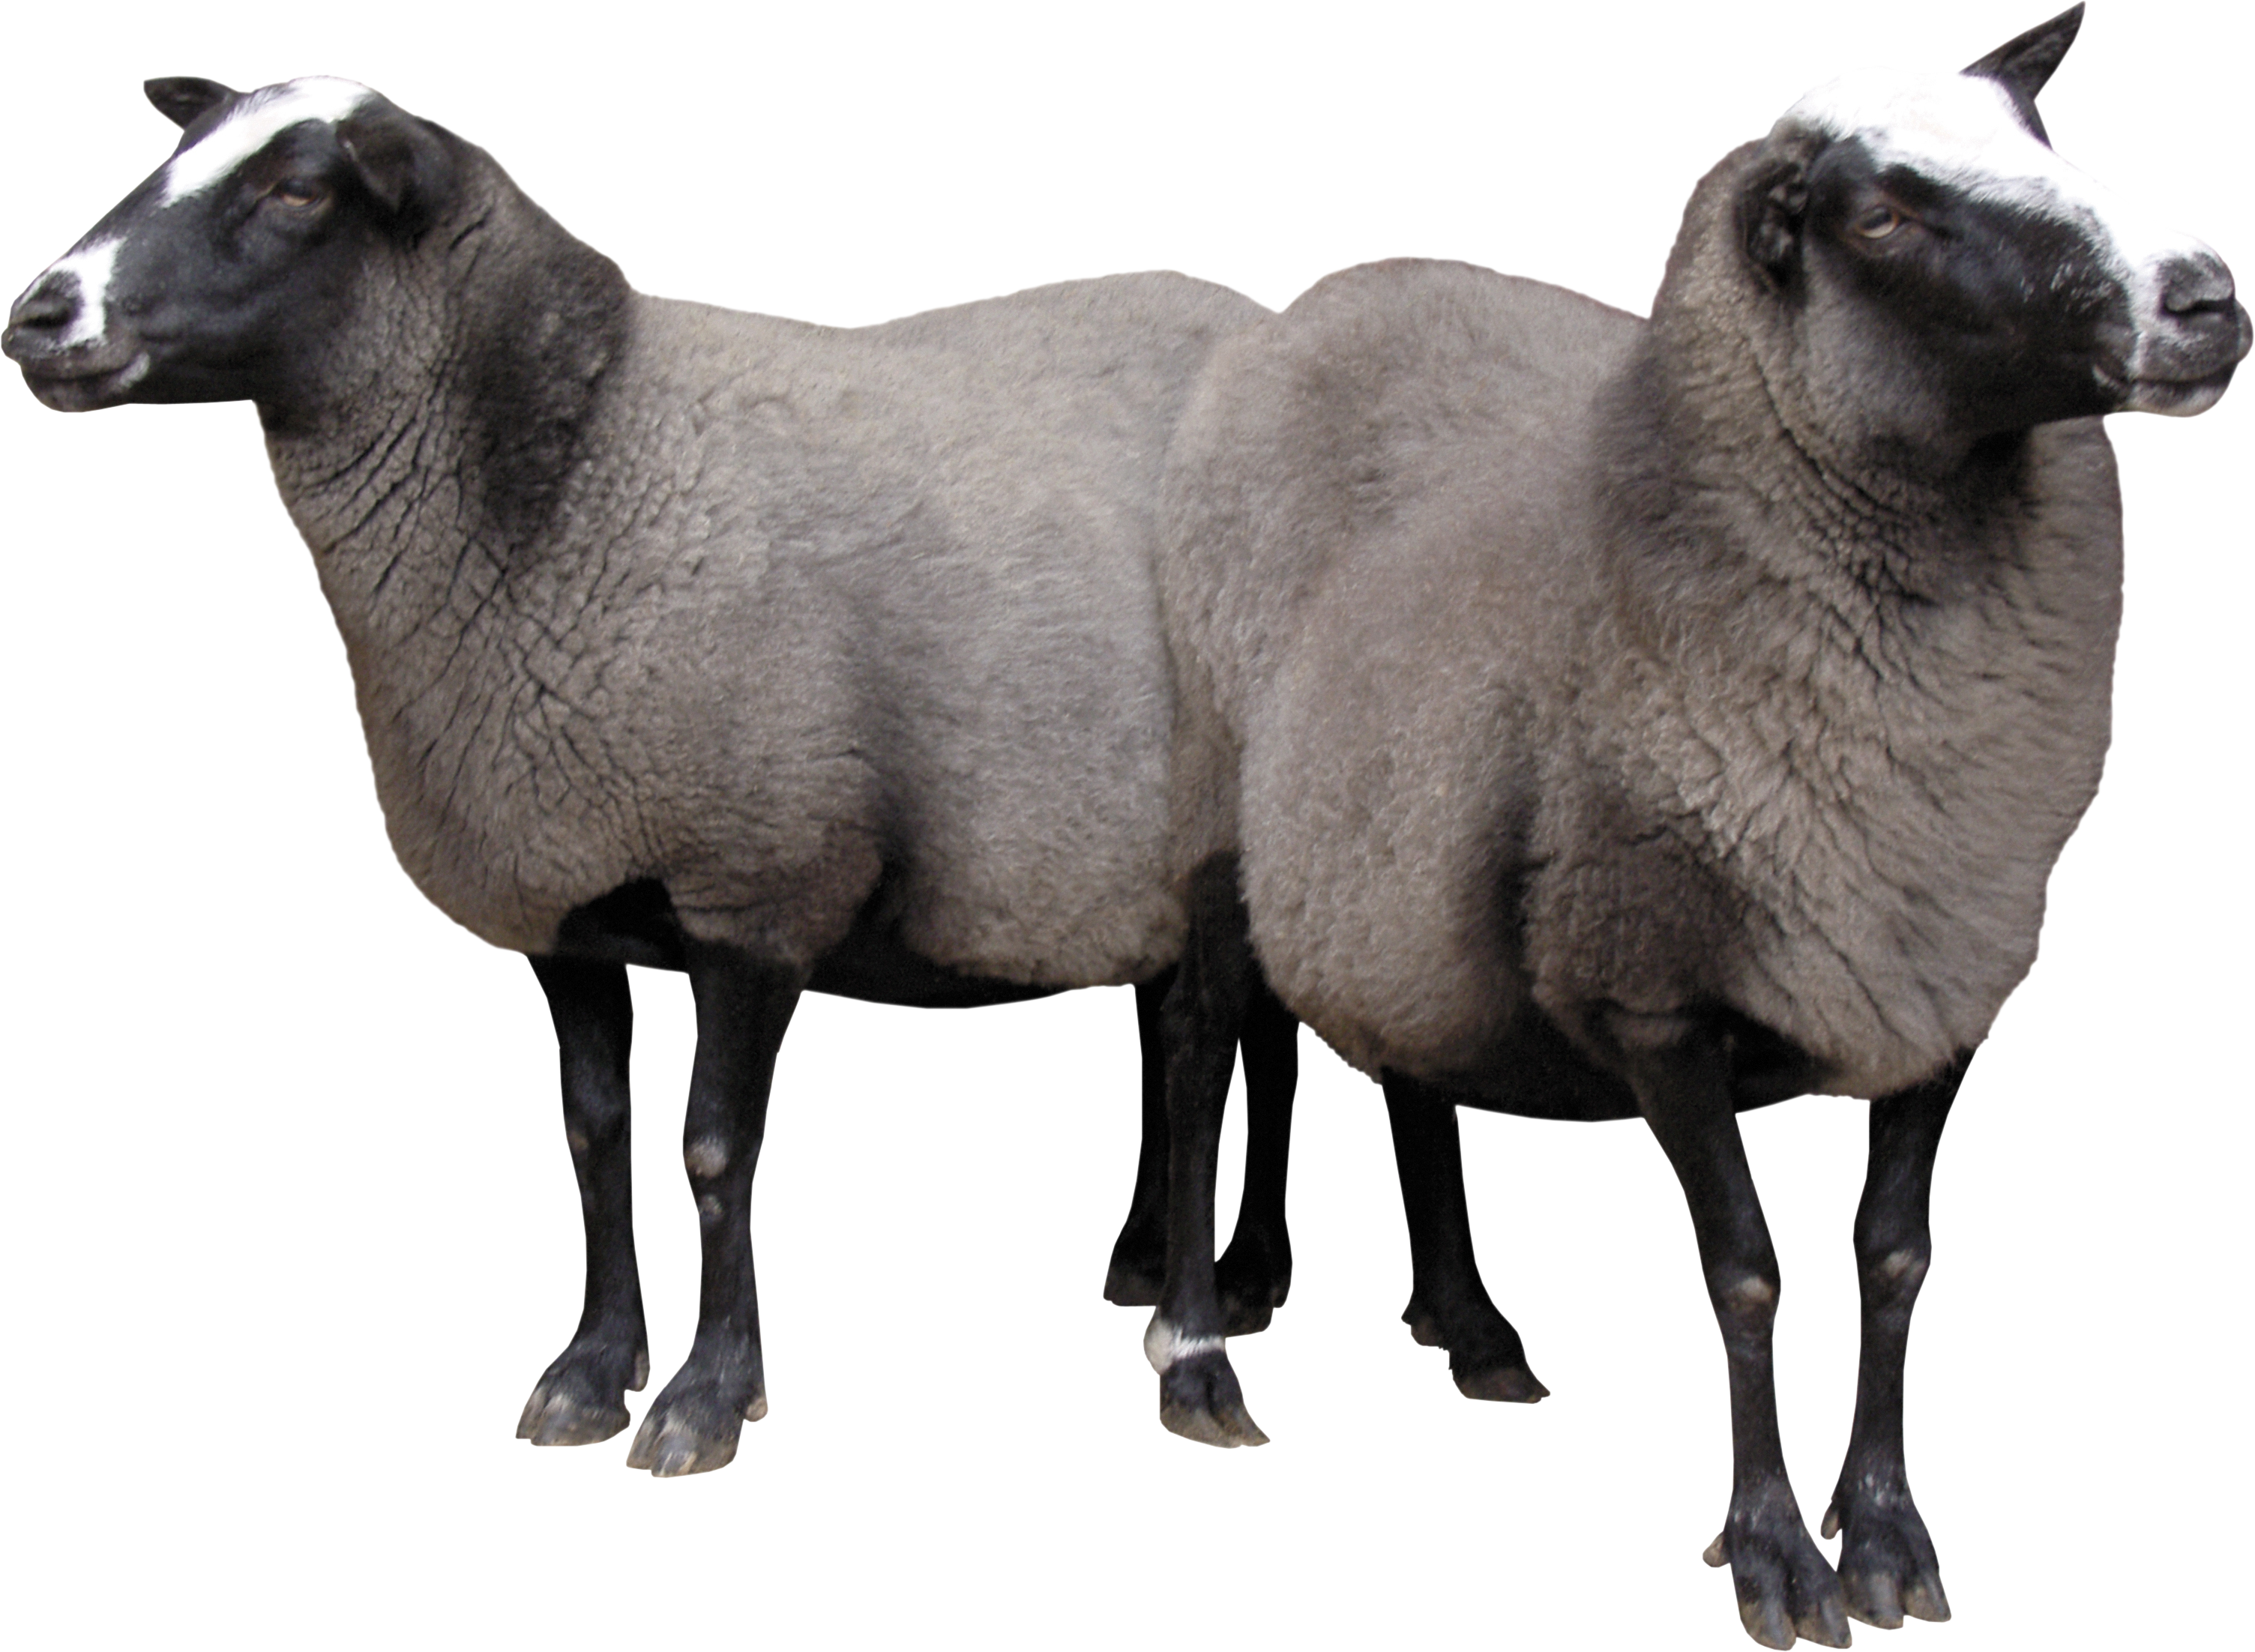 Due pecore